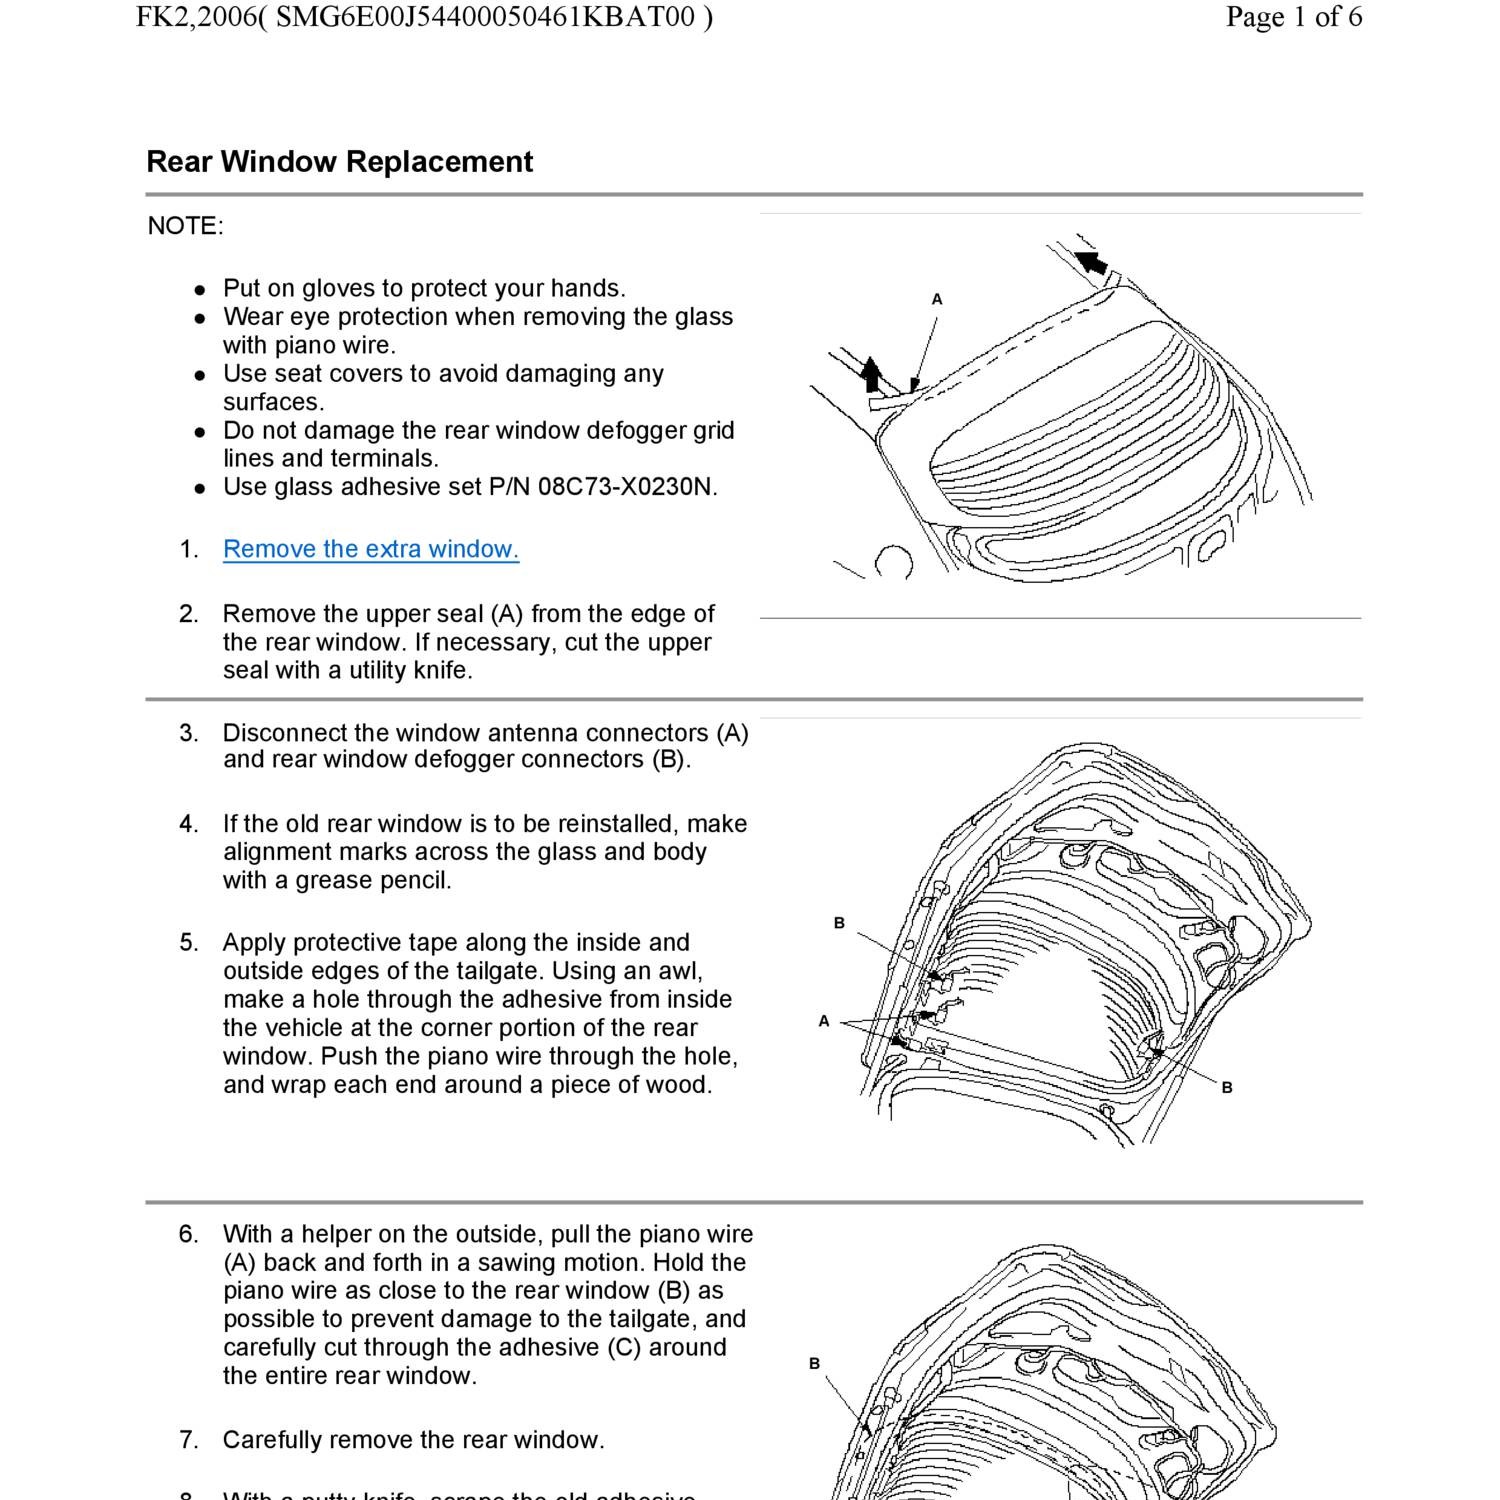 Honda Civic 8 Rear Window Disassembly Manual.pdf DocDroid